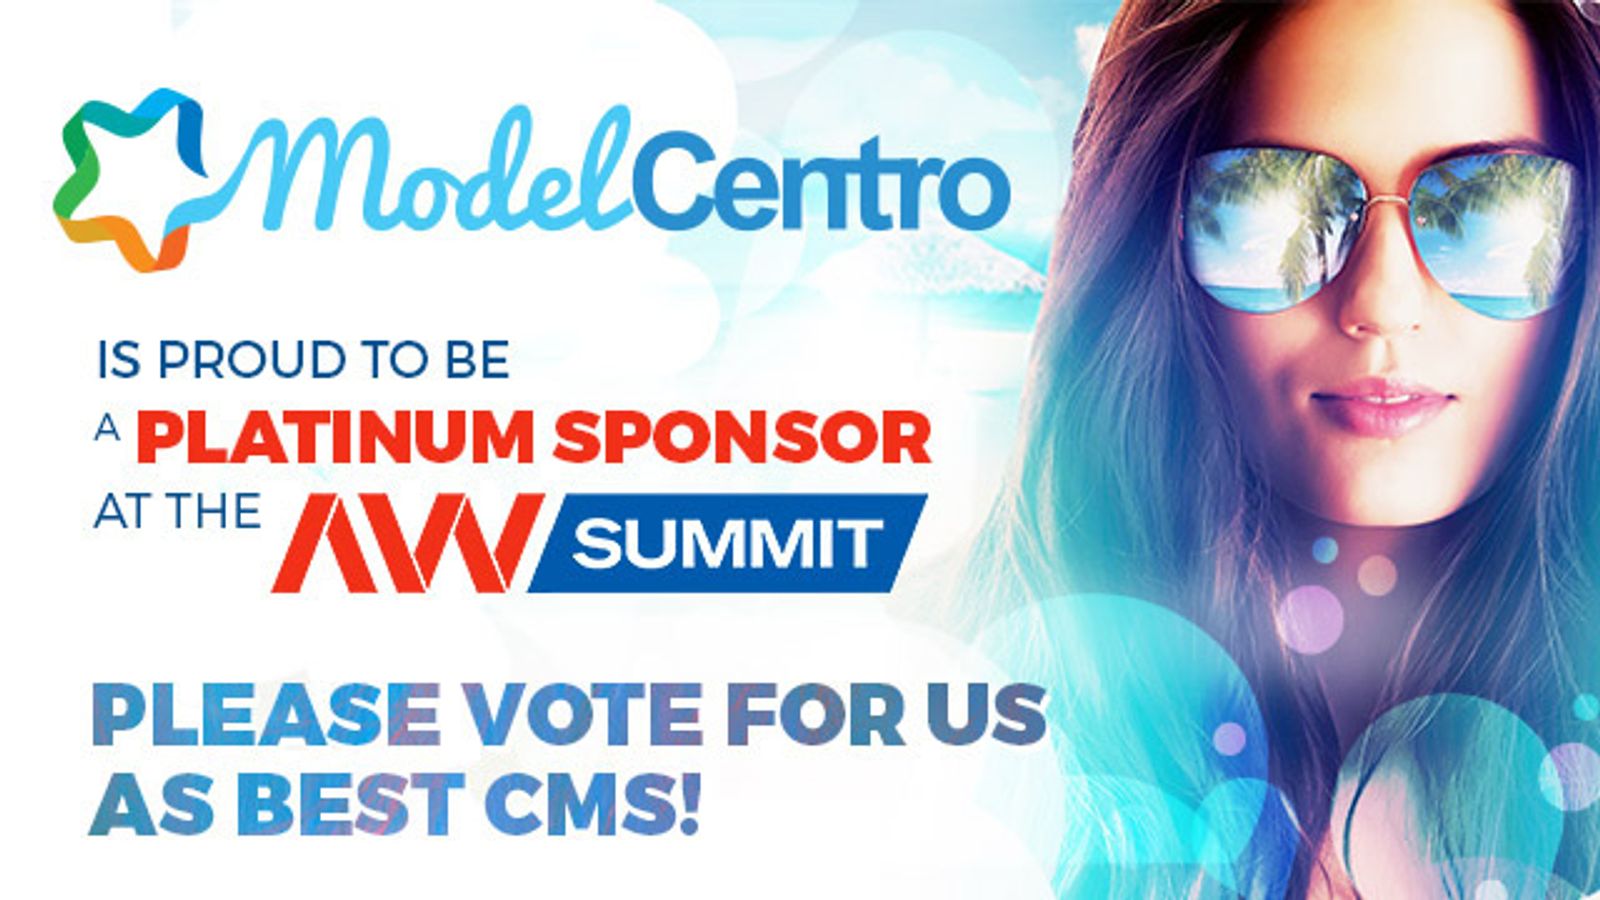 ModelCentro to be Platinum Sponsor at AWSummit 2016